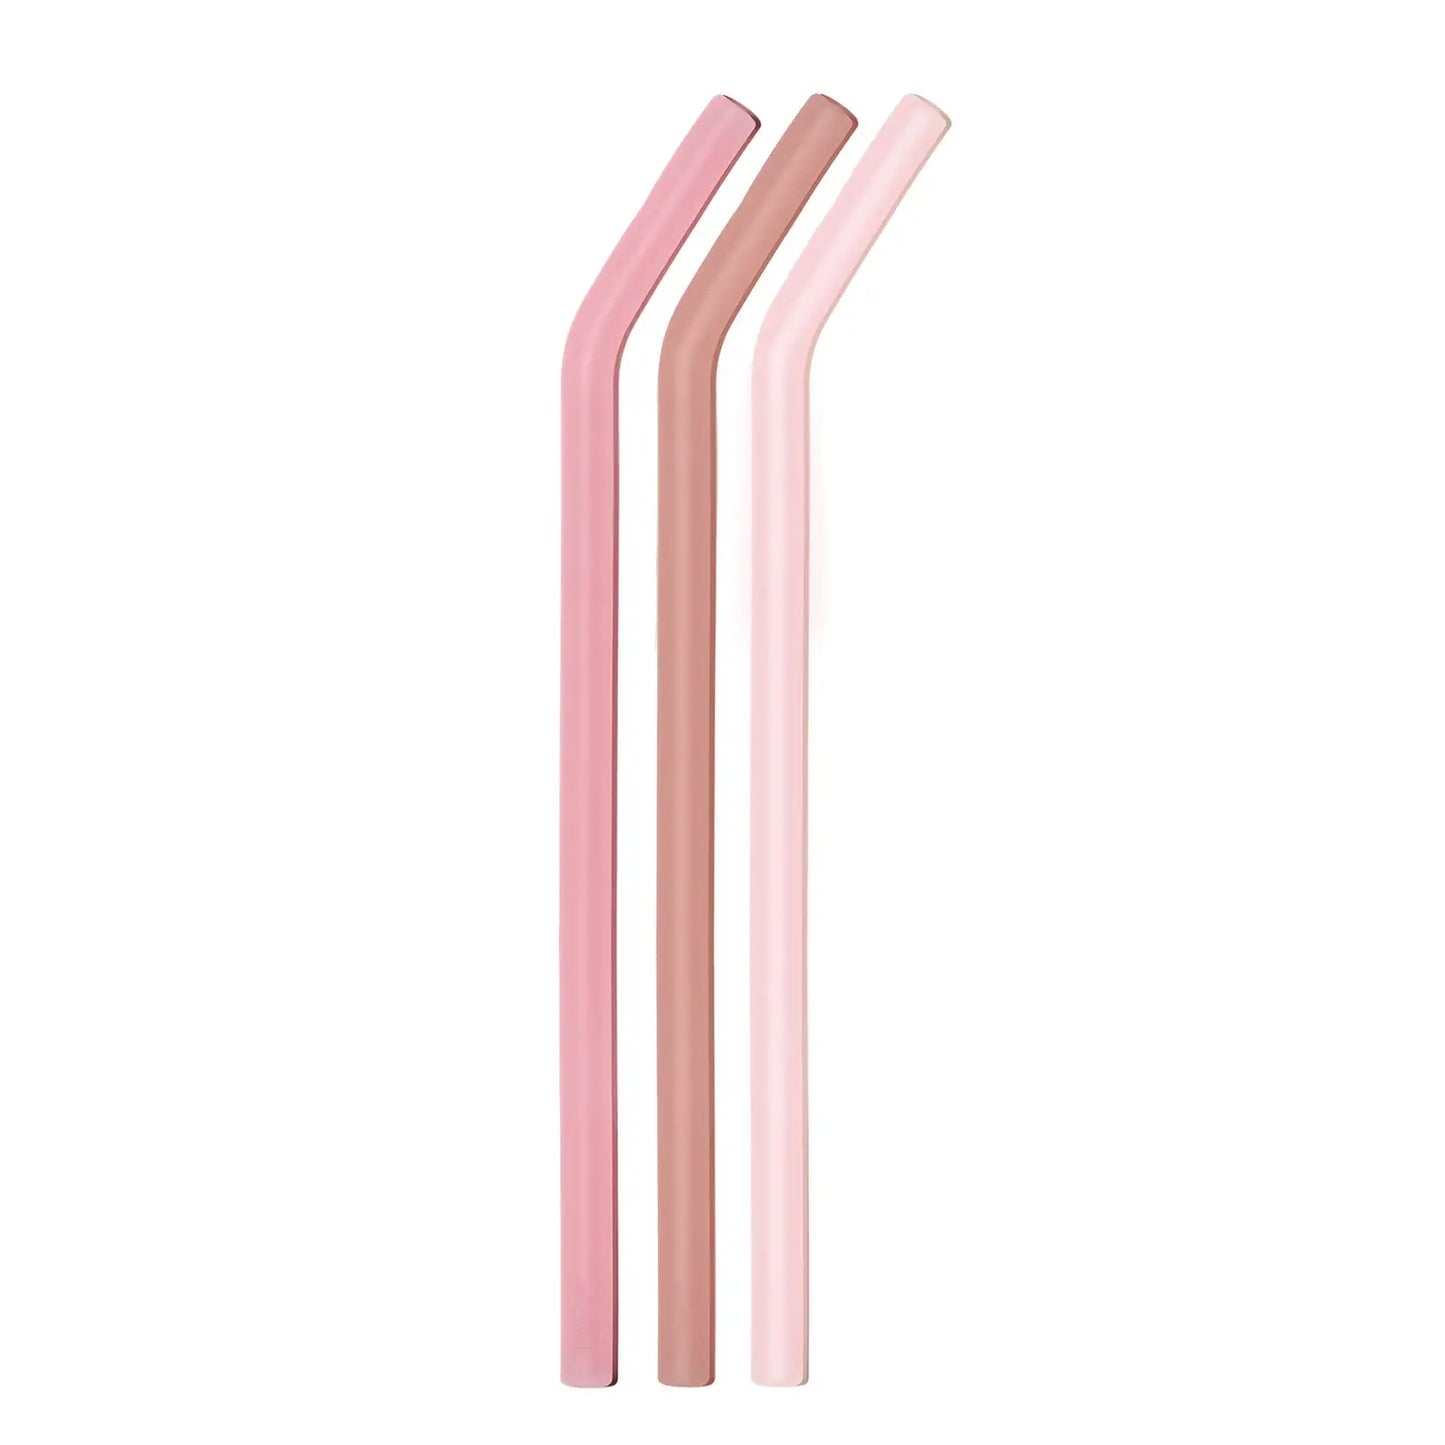 Champagne Pink Straws